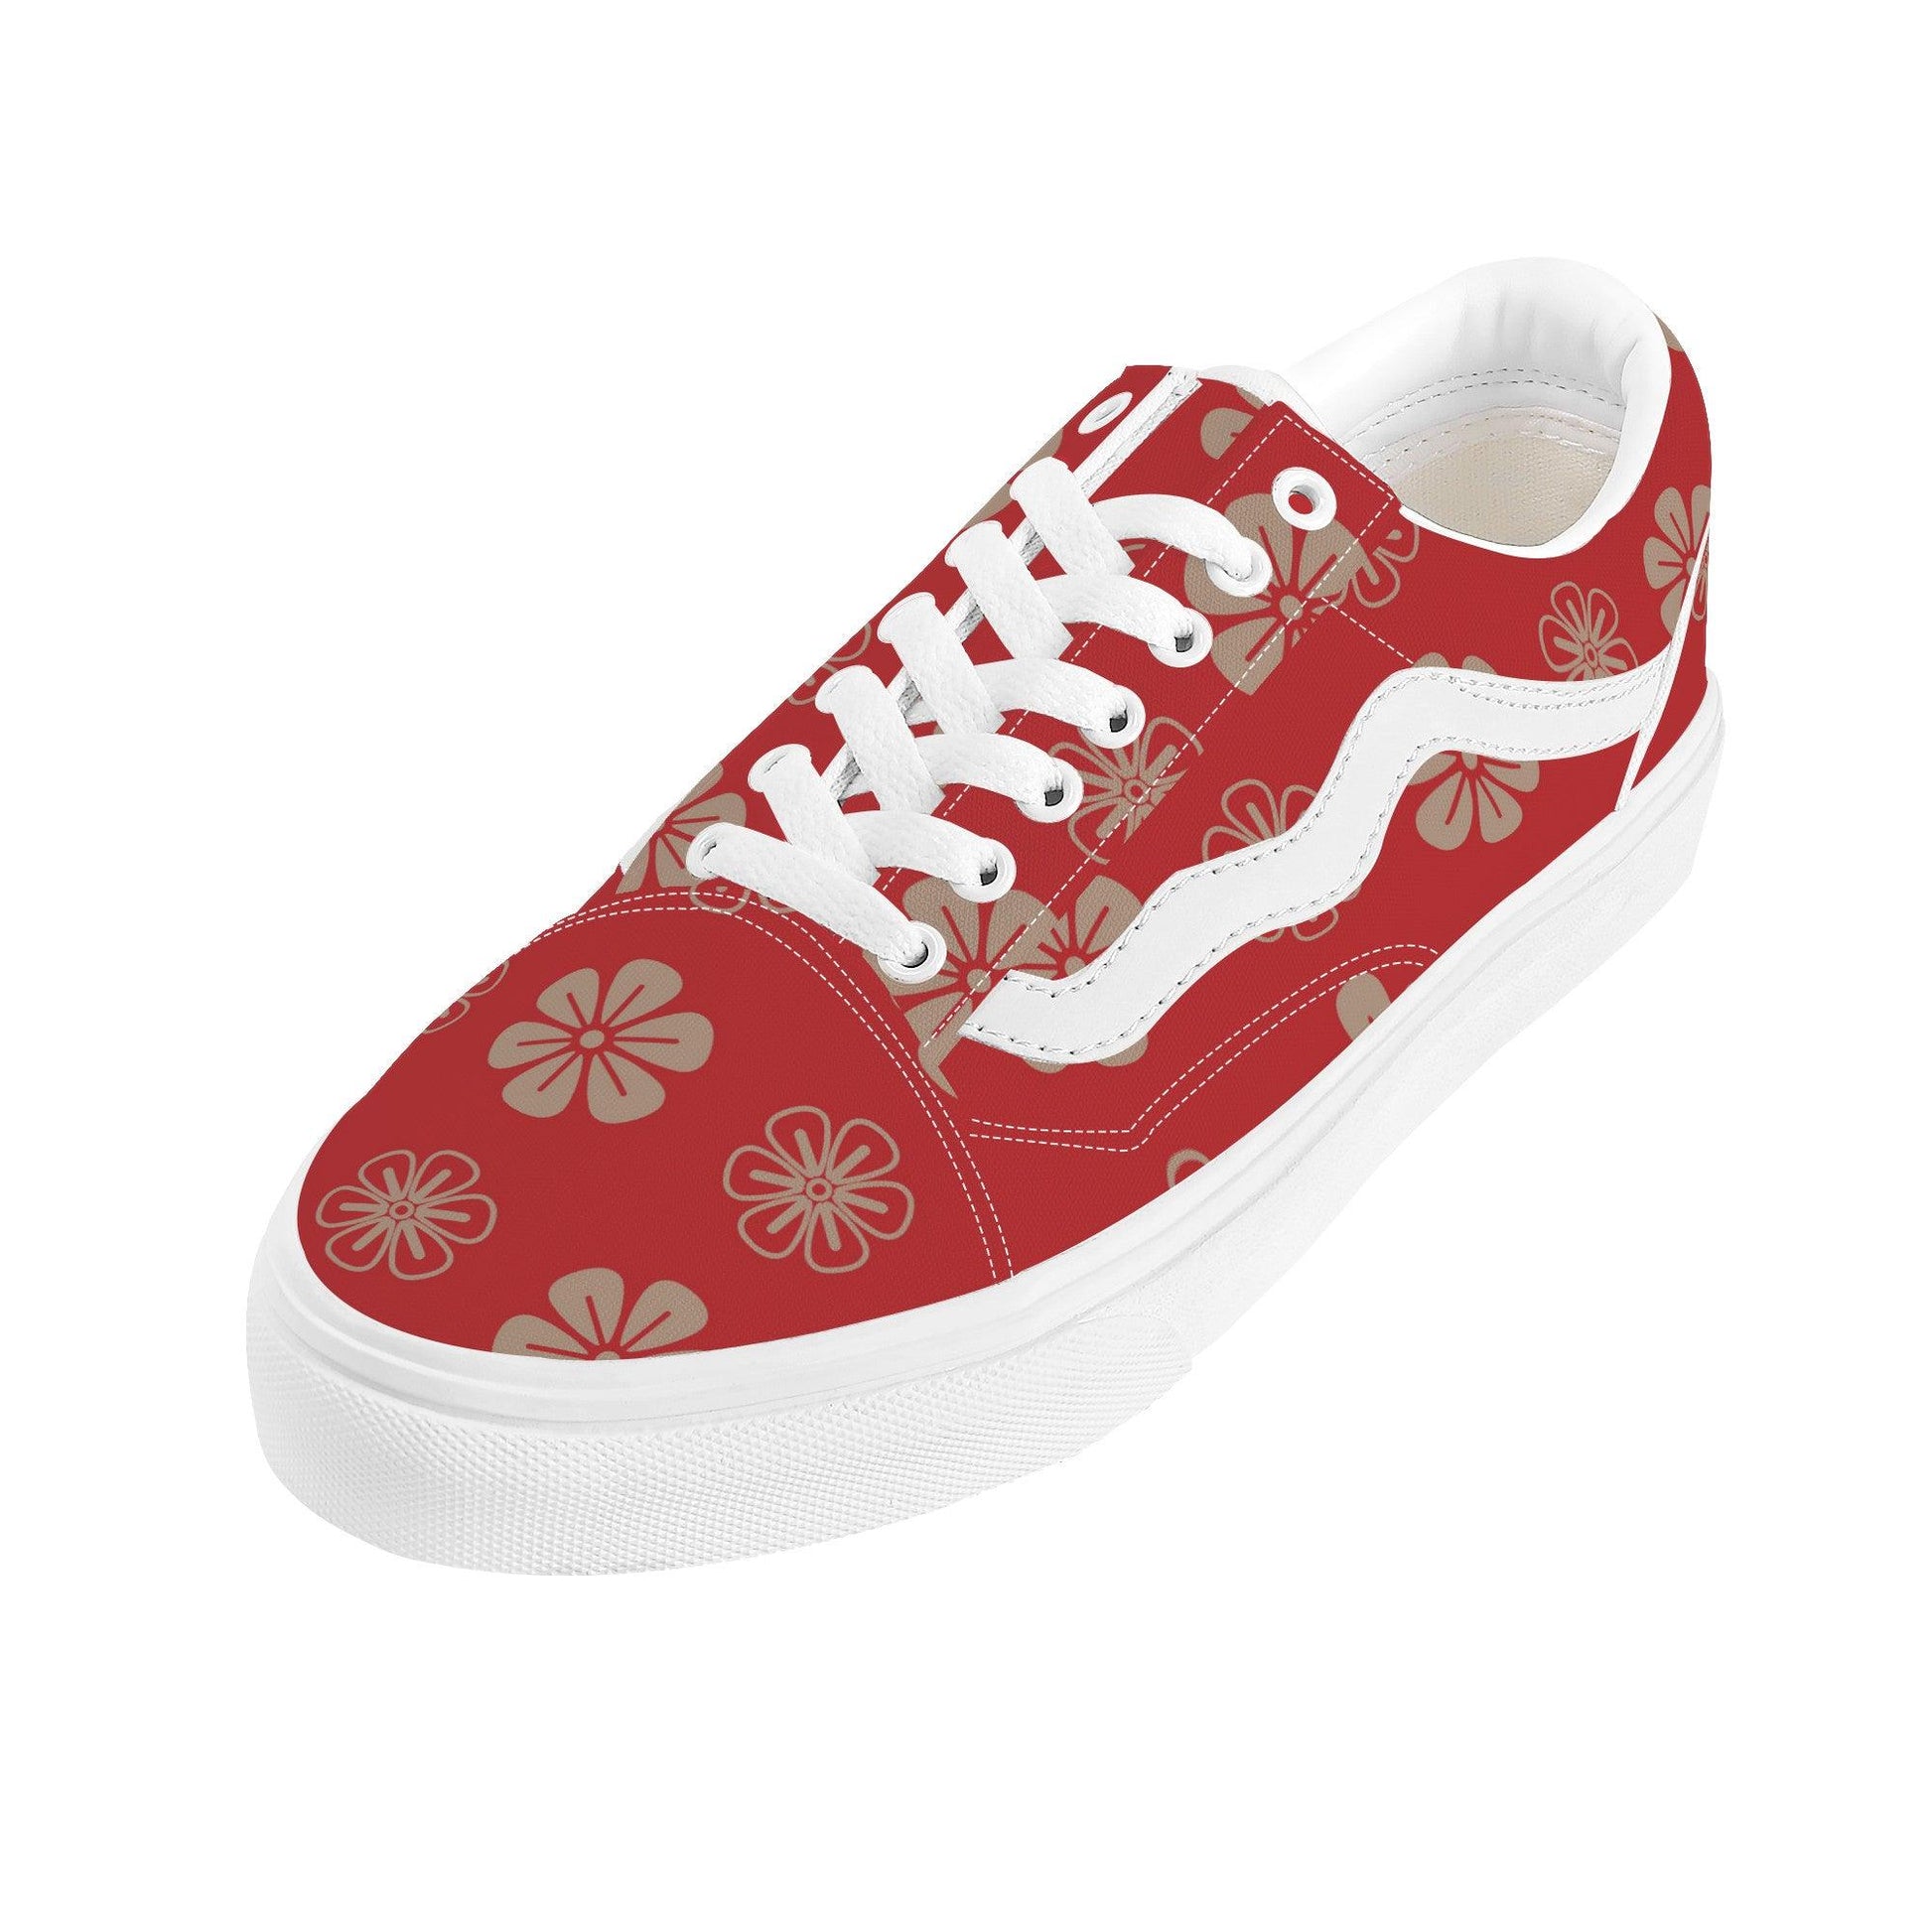 Aka 赤 - Red Low Top Flat Sneaker - Kaito Japan Design 